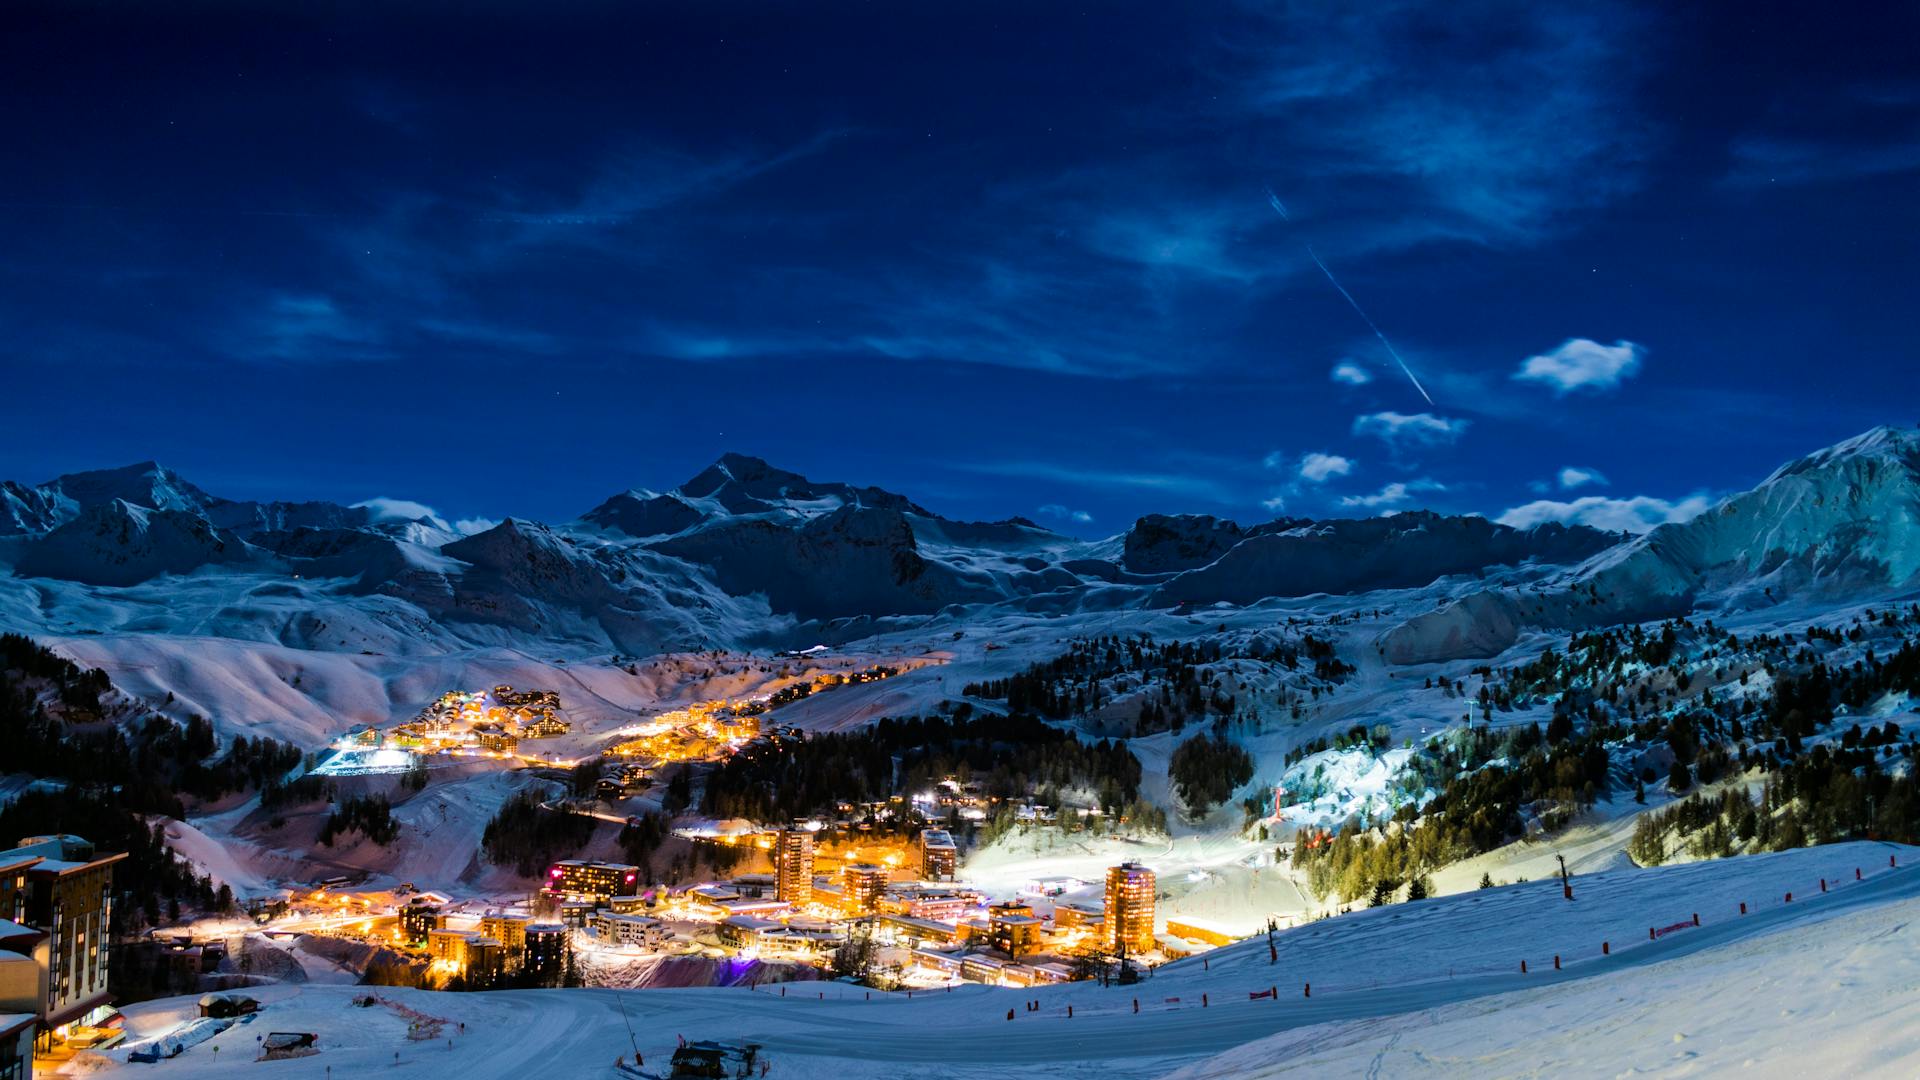 La Plagne ski resort at night with town lit up